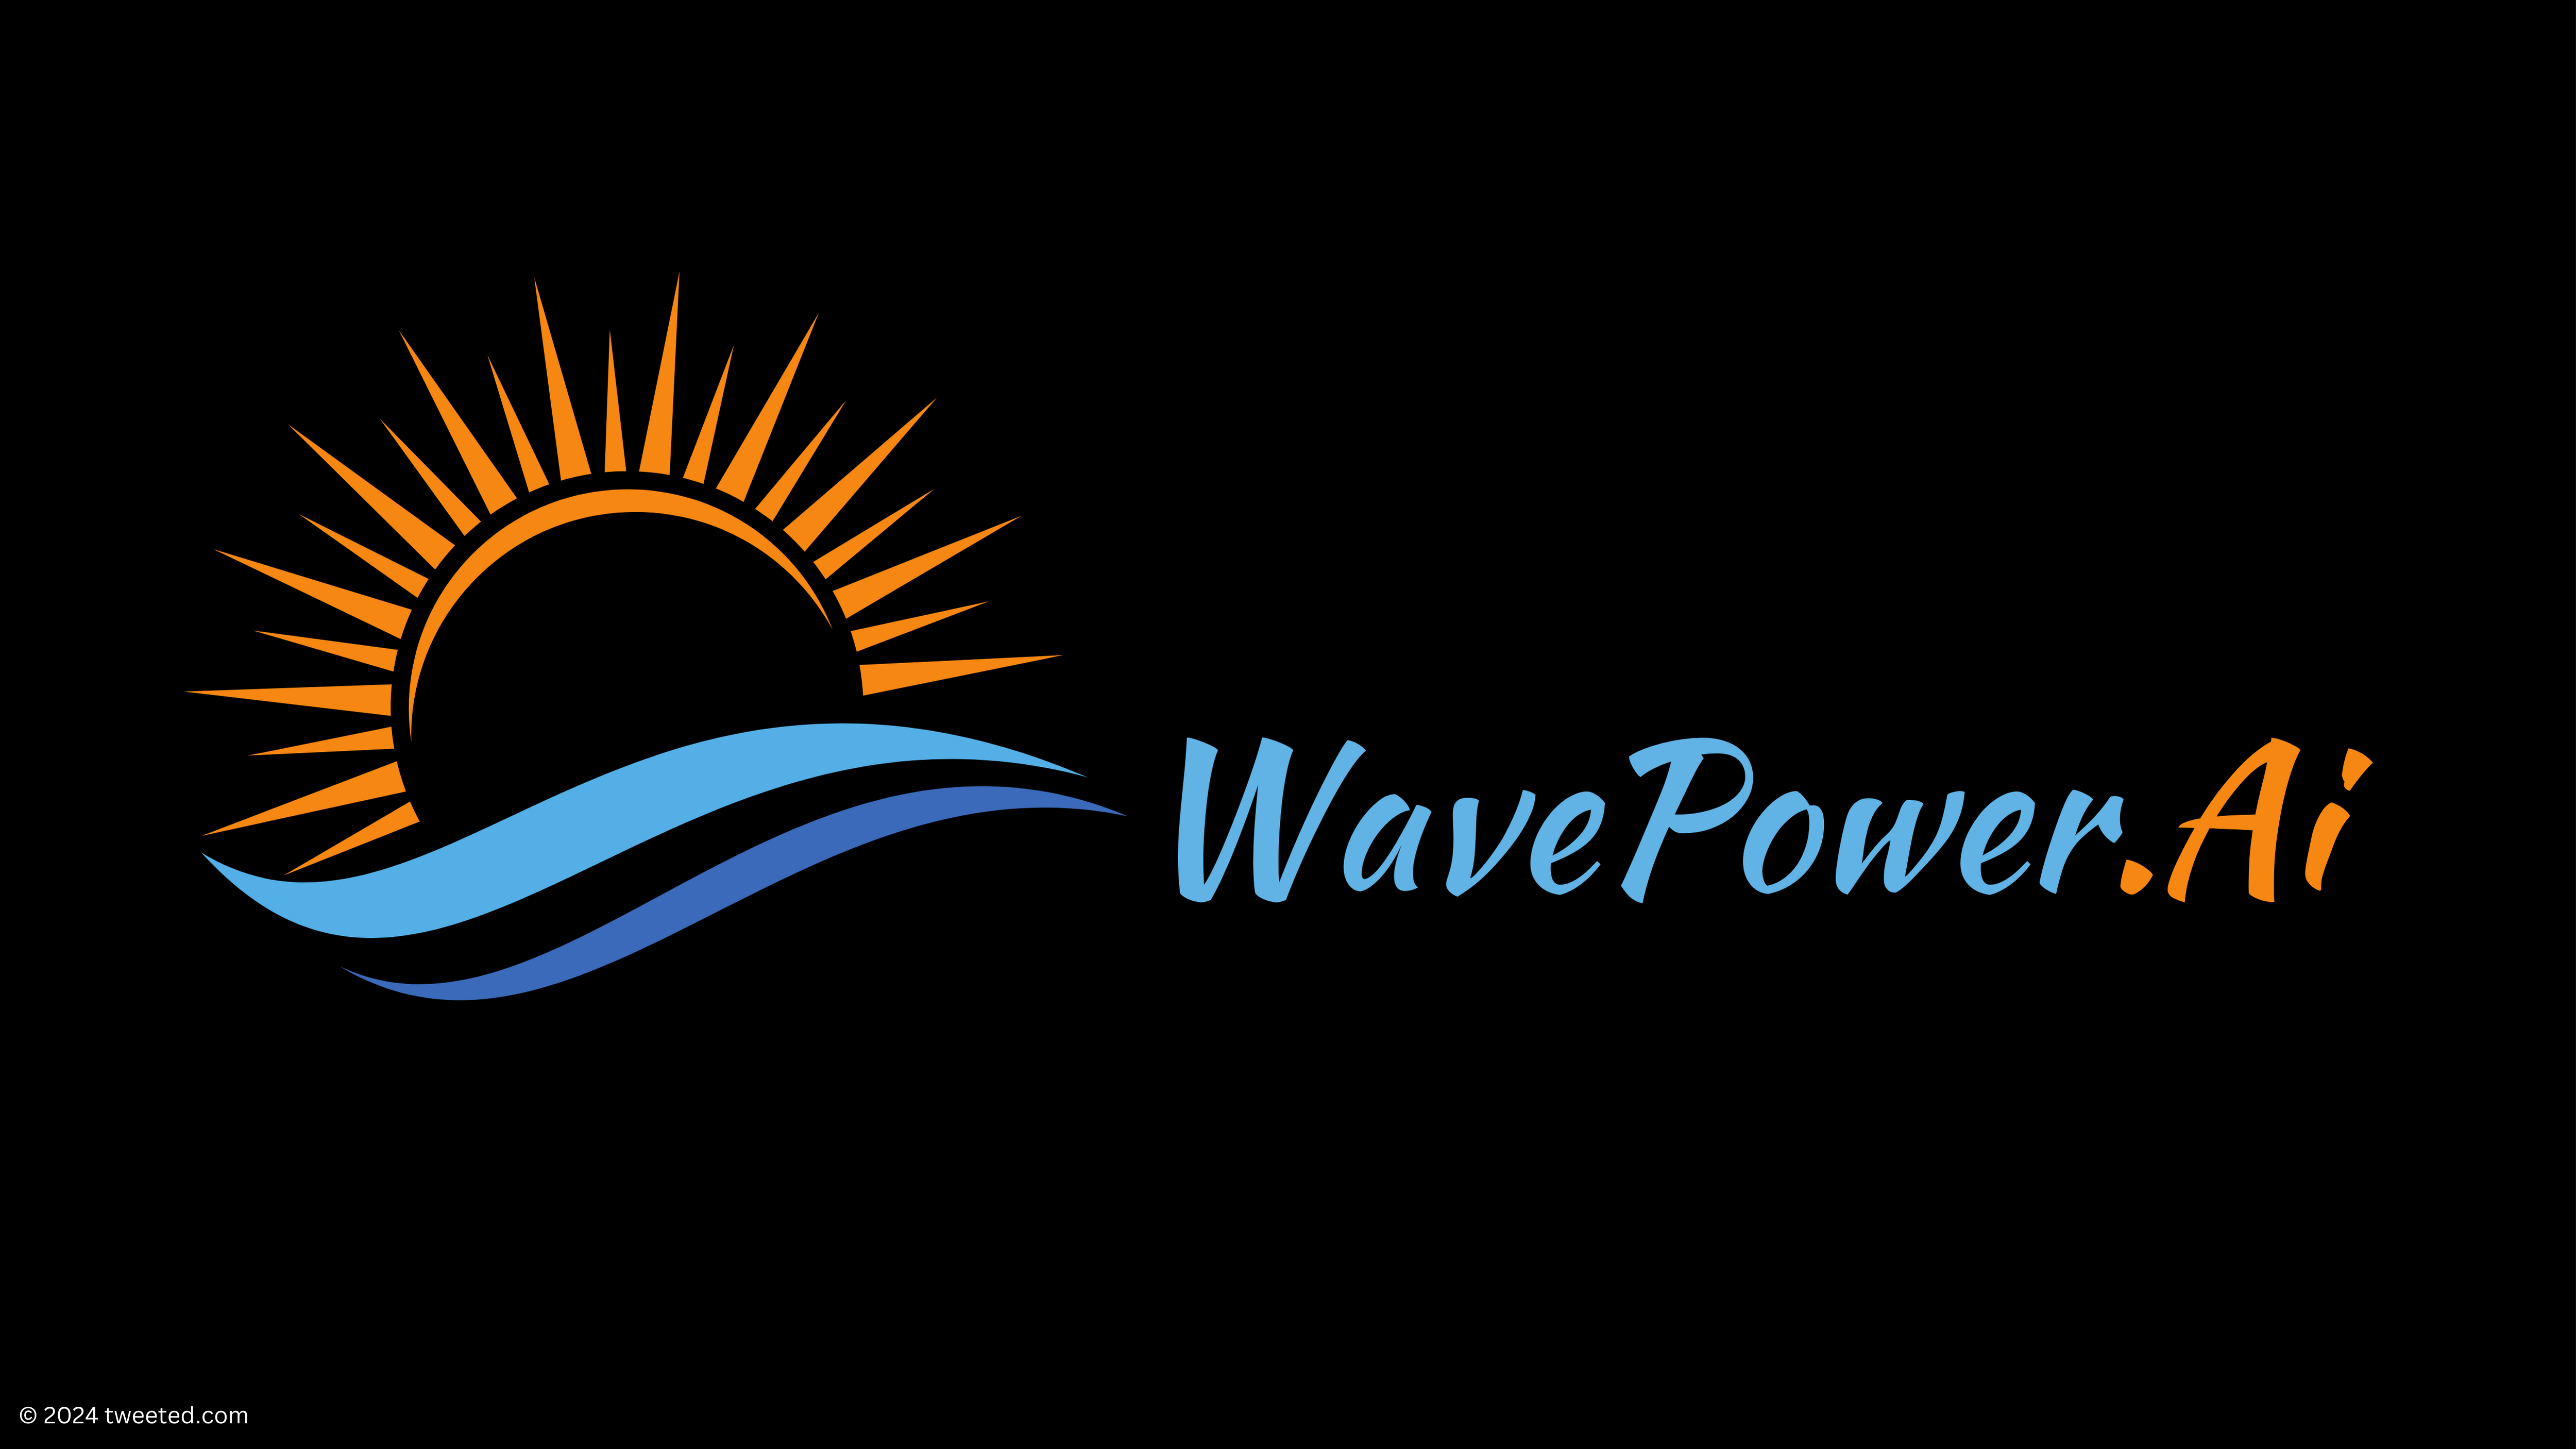 WavePower.Ai